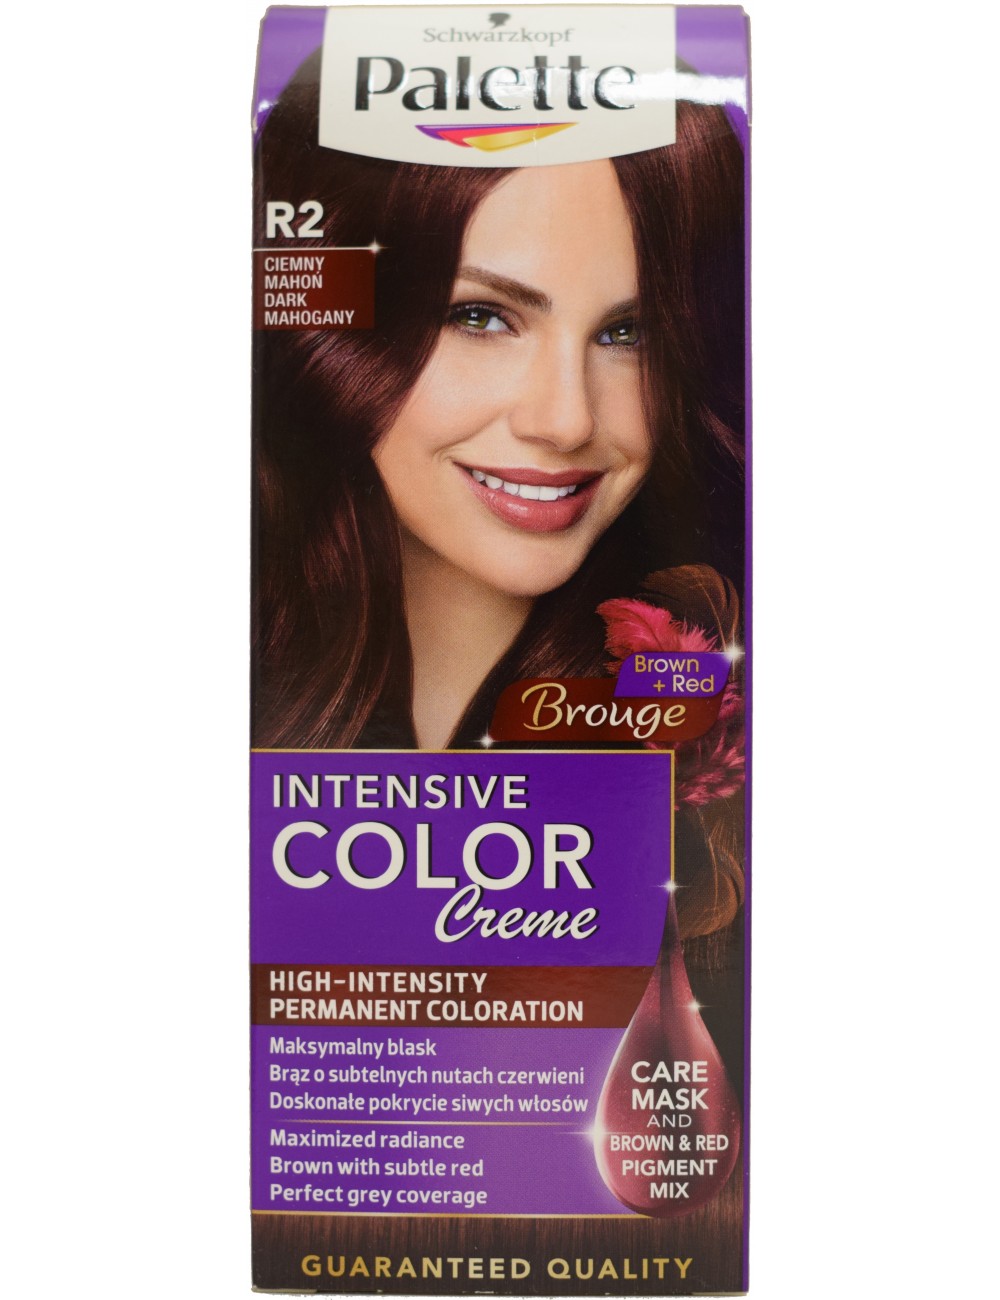 Palette Intensive Color Creme R2 Ciemny Mahoń Farba do Włosów 1 szt